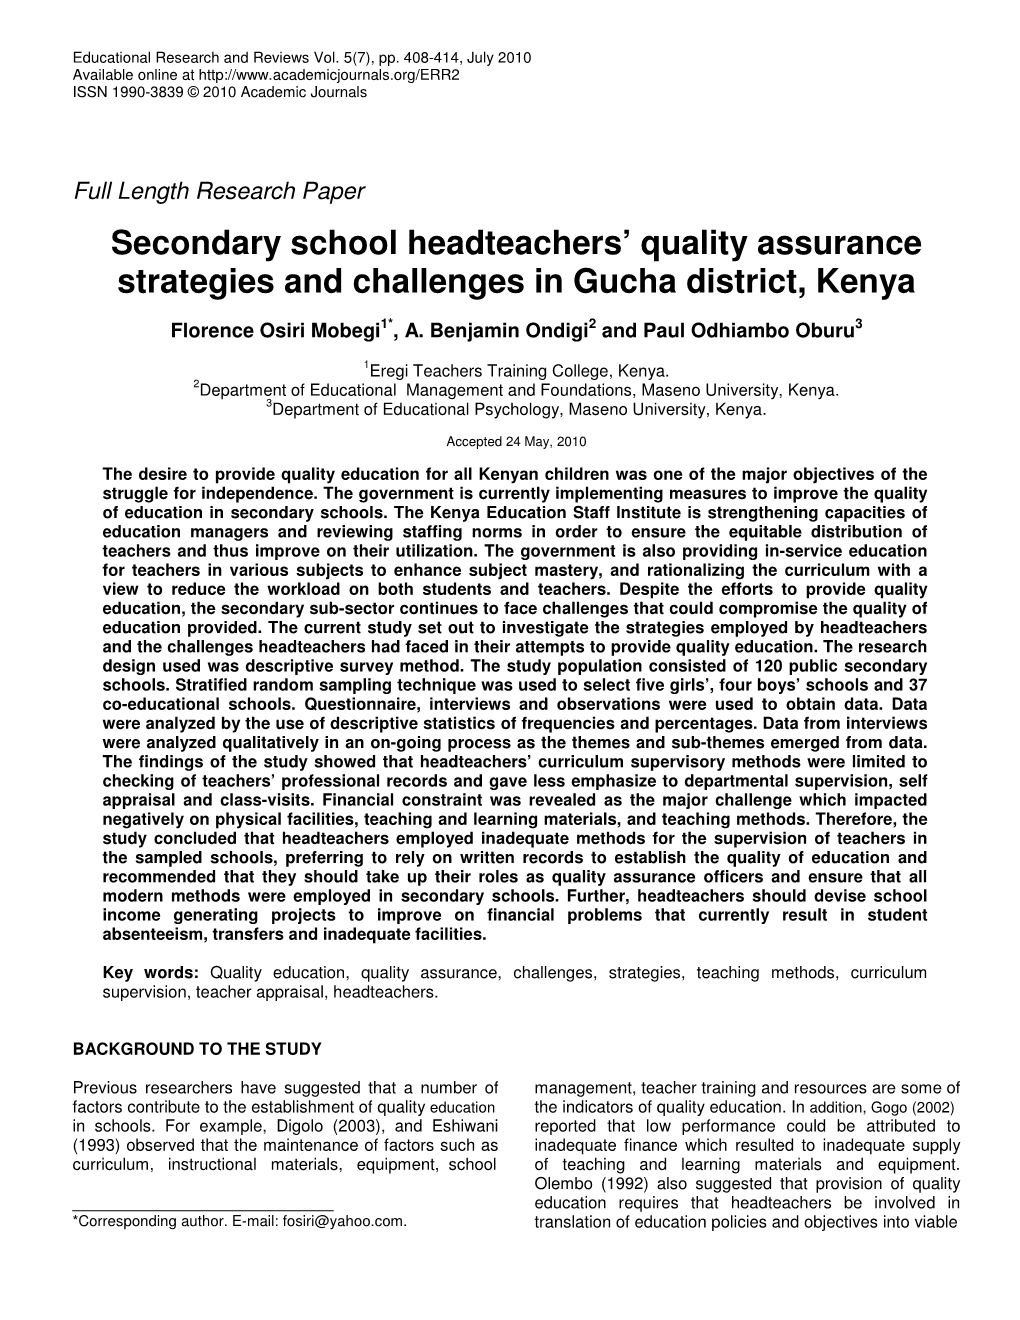 Secondary School Headteachers' Quality Assurance Strategies And